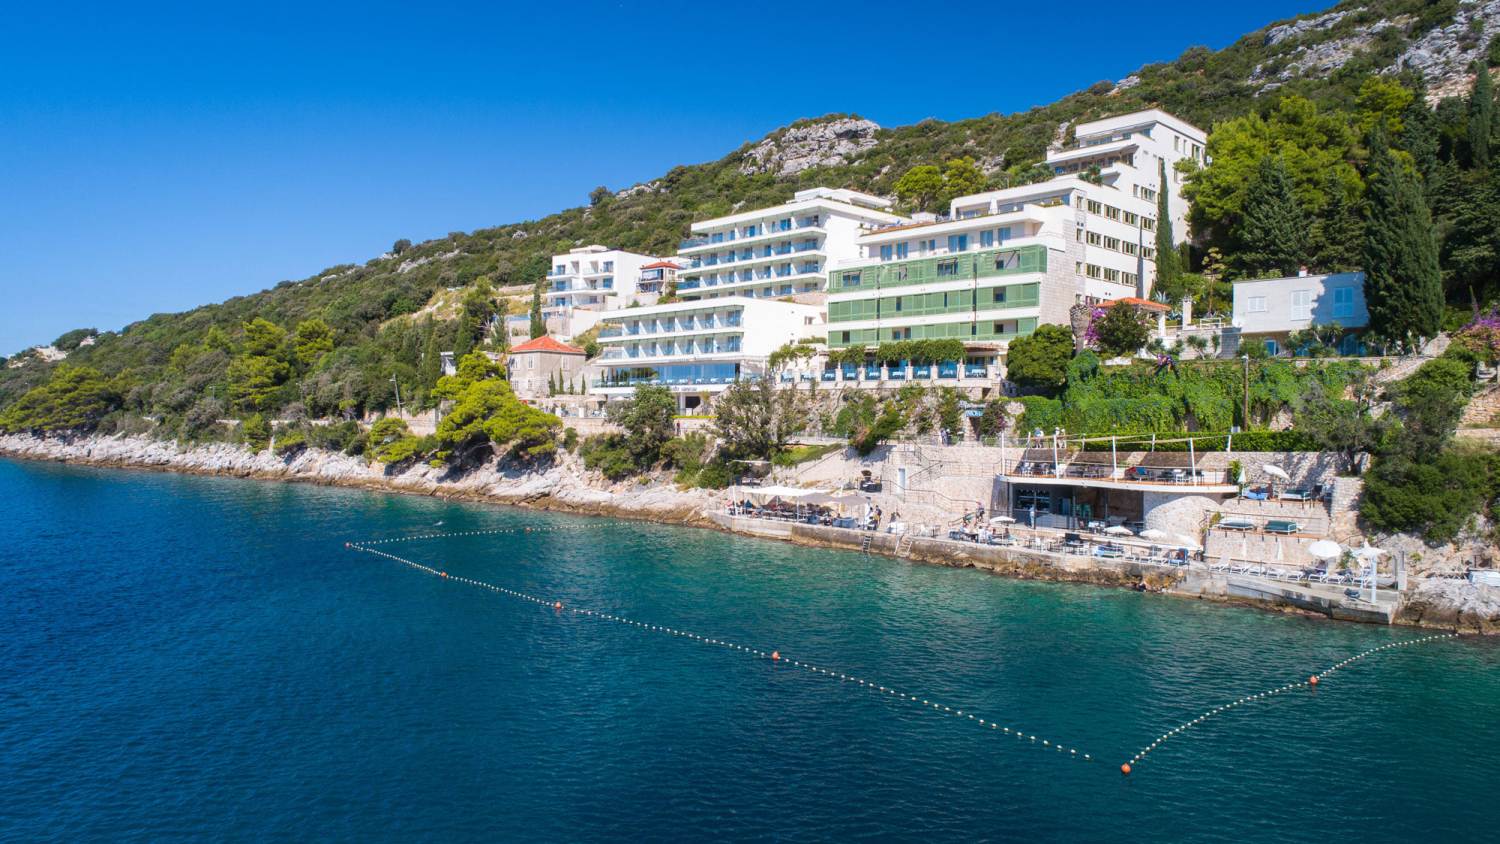 Hotel More Dubrovnik, Dalmatia - Croatia